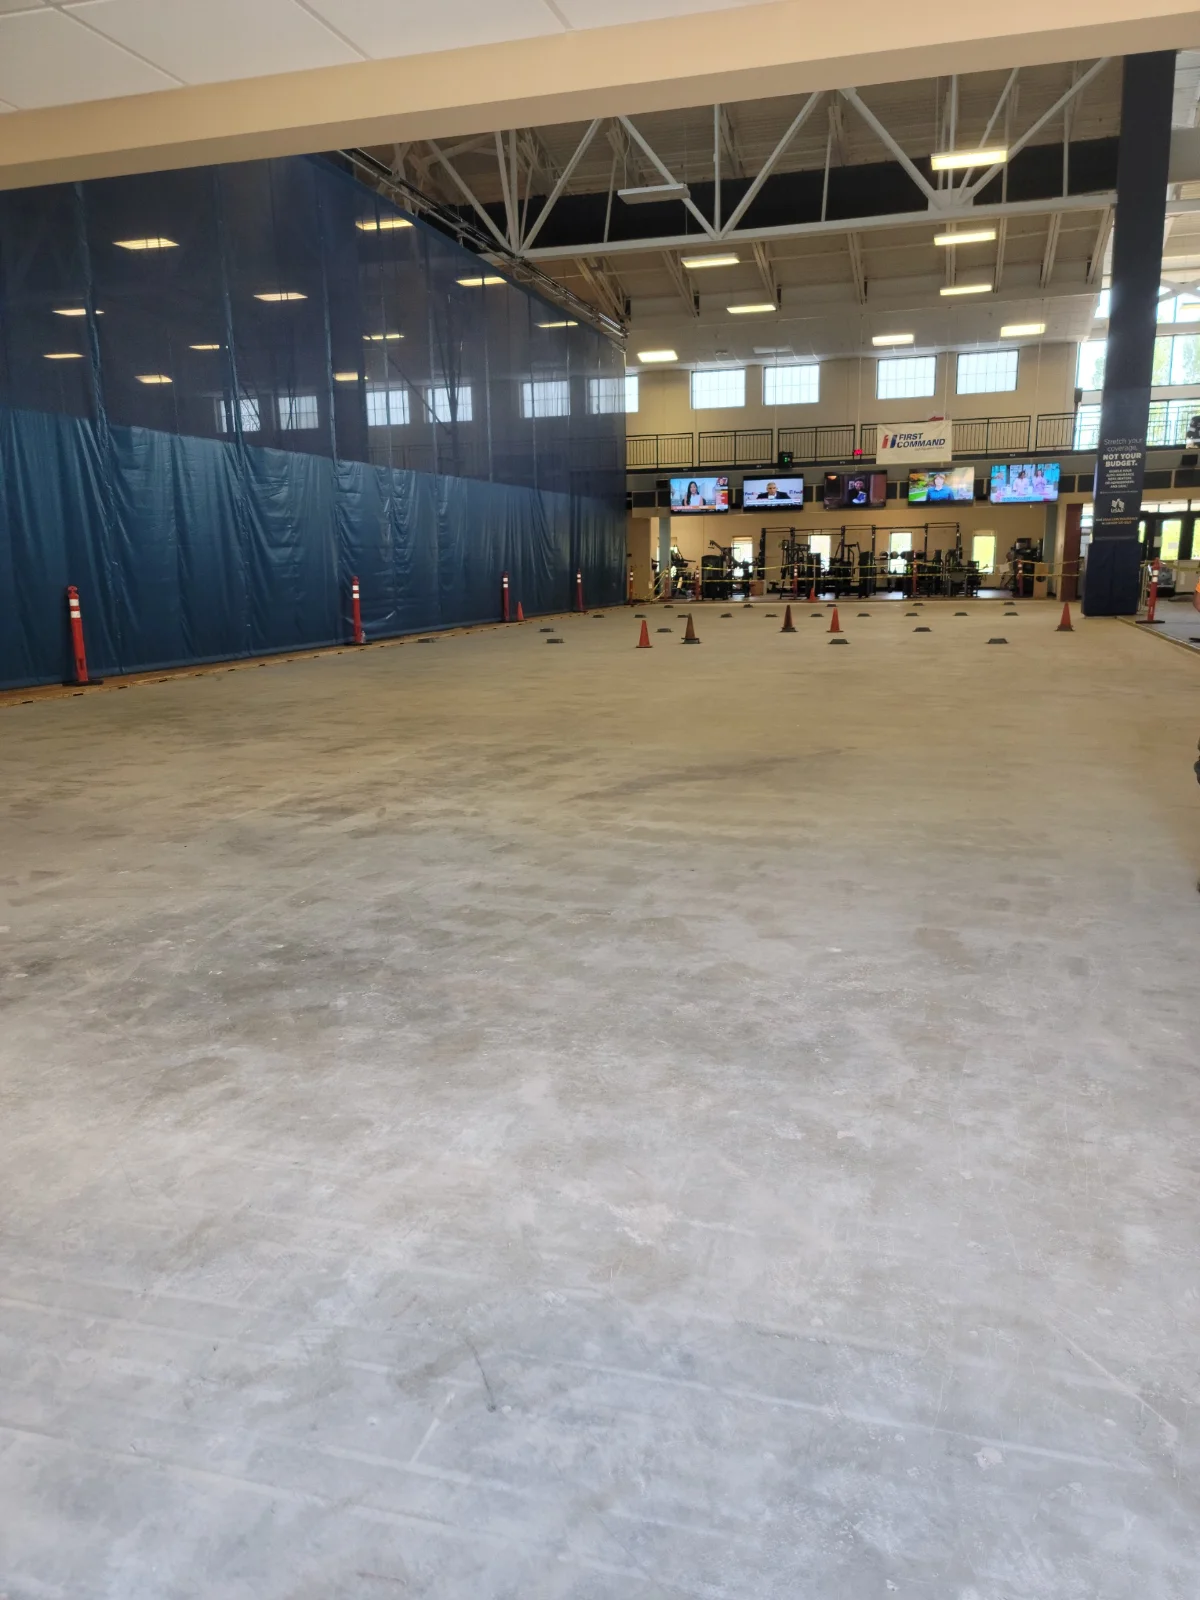 Flooring demolition inside Fitness Center at Fairchild Airforce Base, WA.